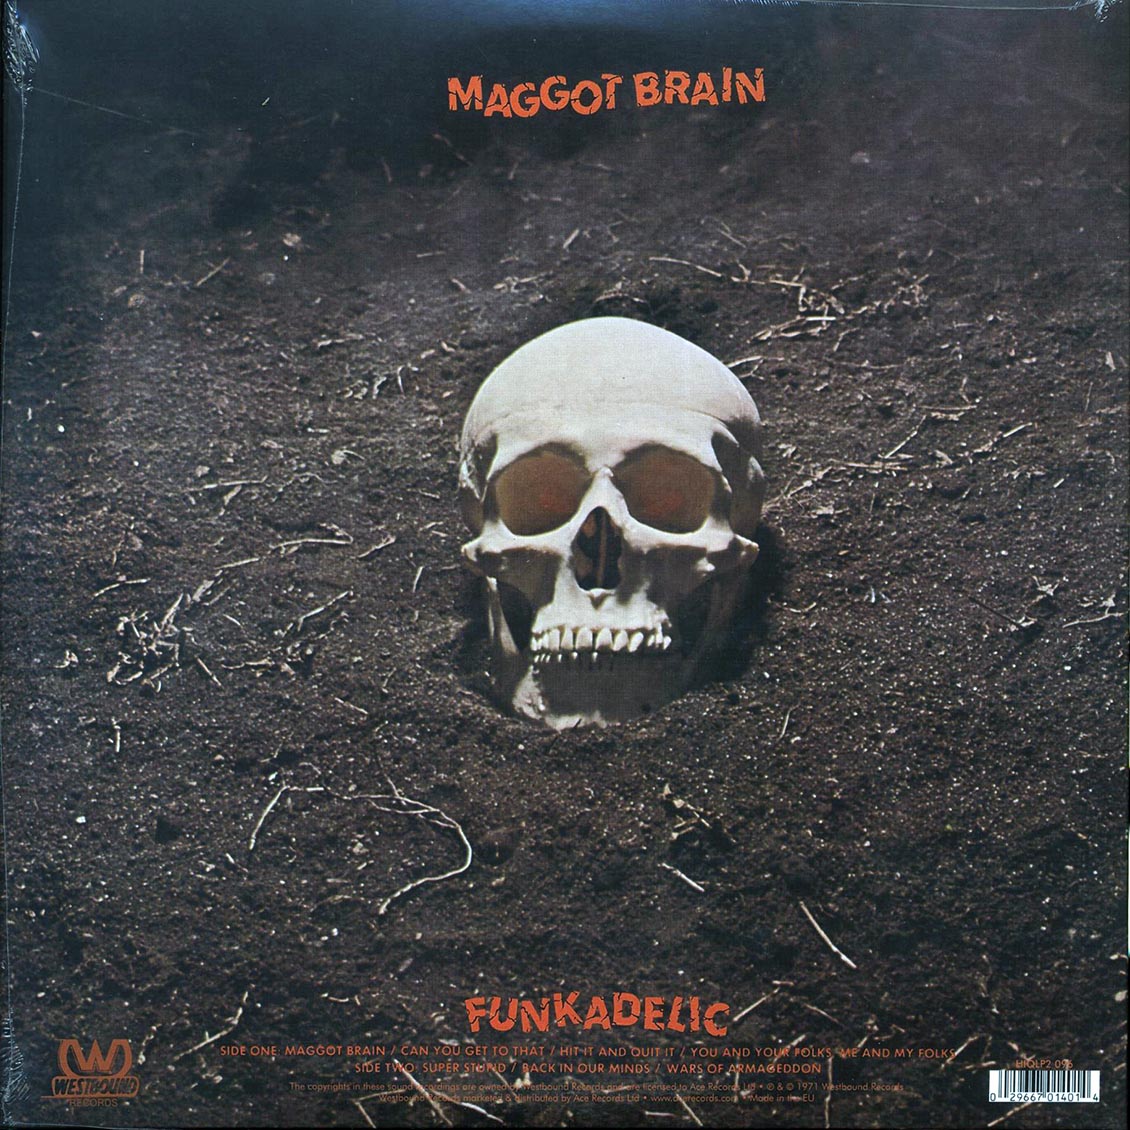 Funkadelic - Maggot Brain (+ 3 bonus tracks) (2xLP) (180g) - Vinyl LP, LP